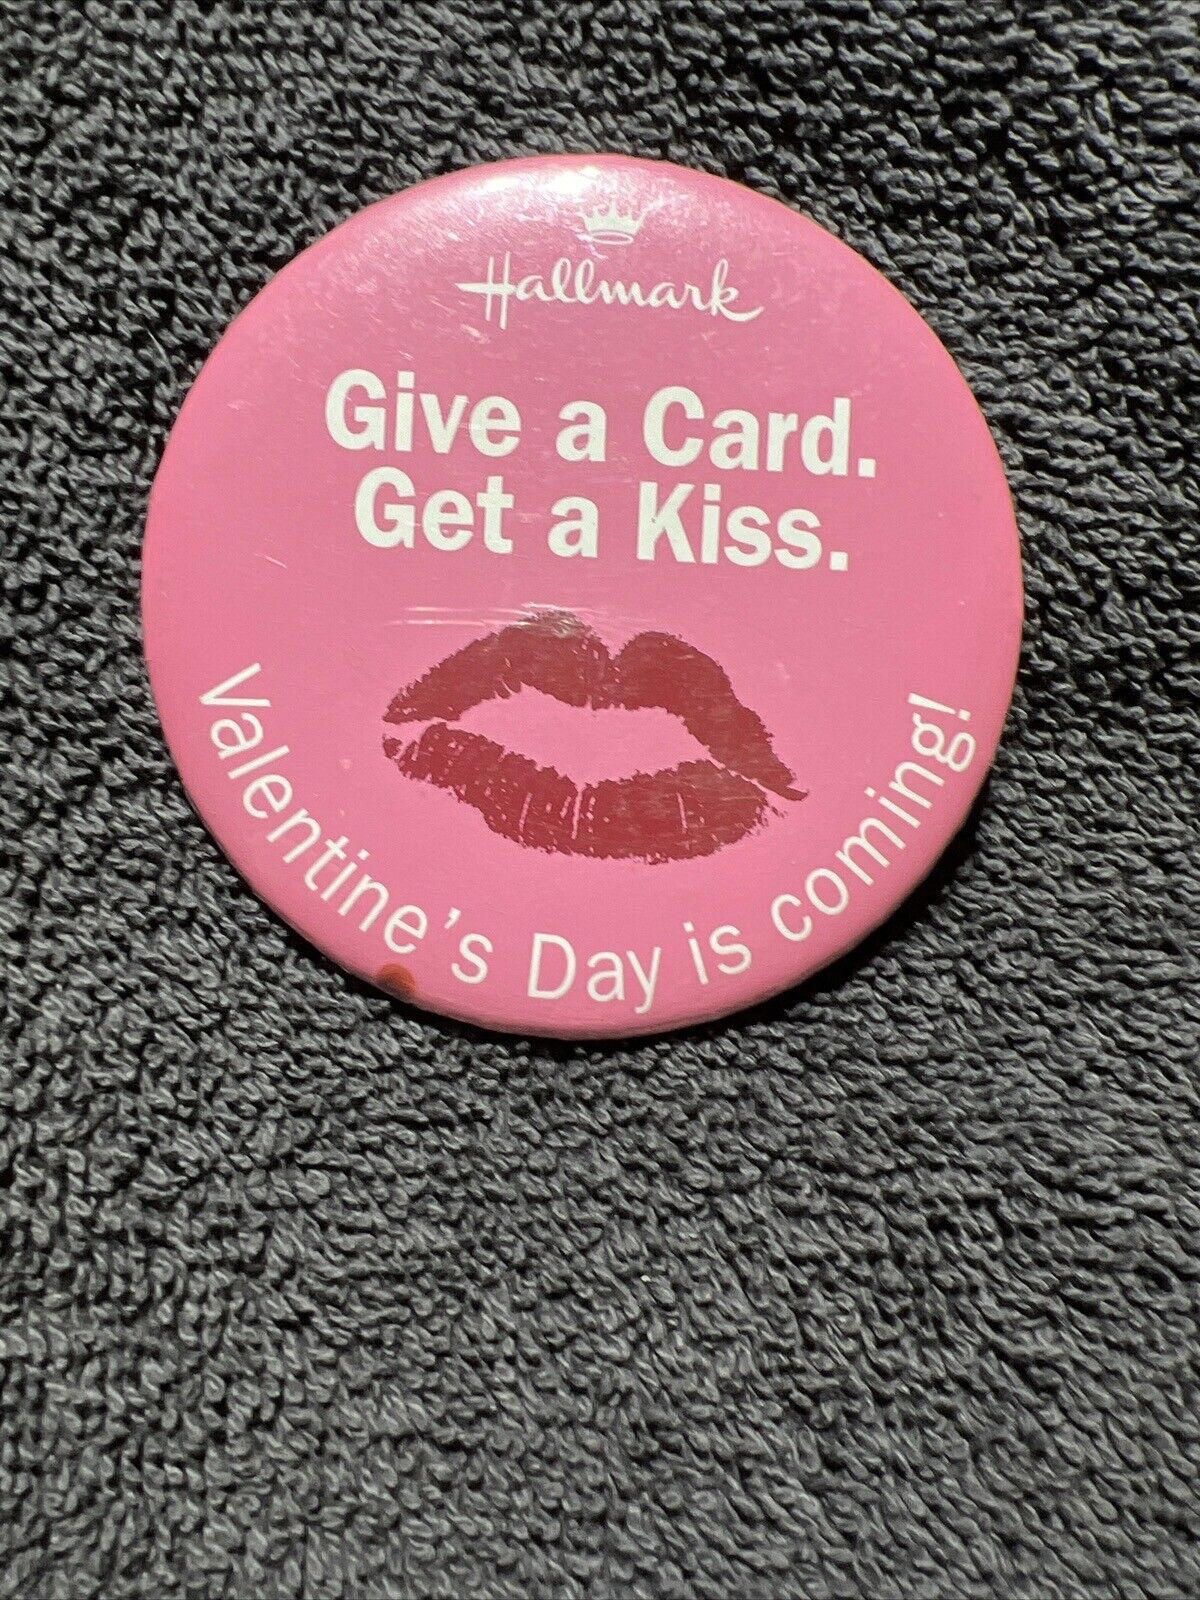 Hallmark Give a card. Get a kiss. pinback button